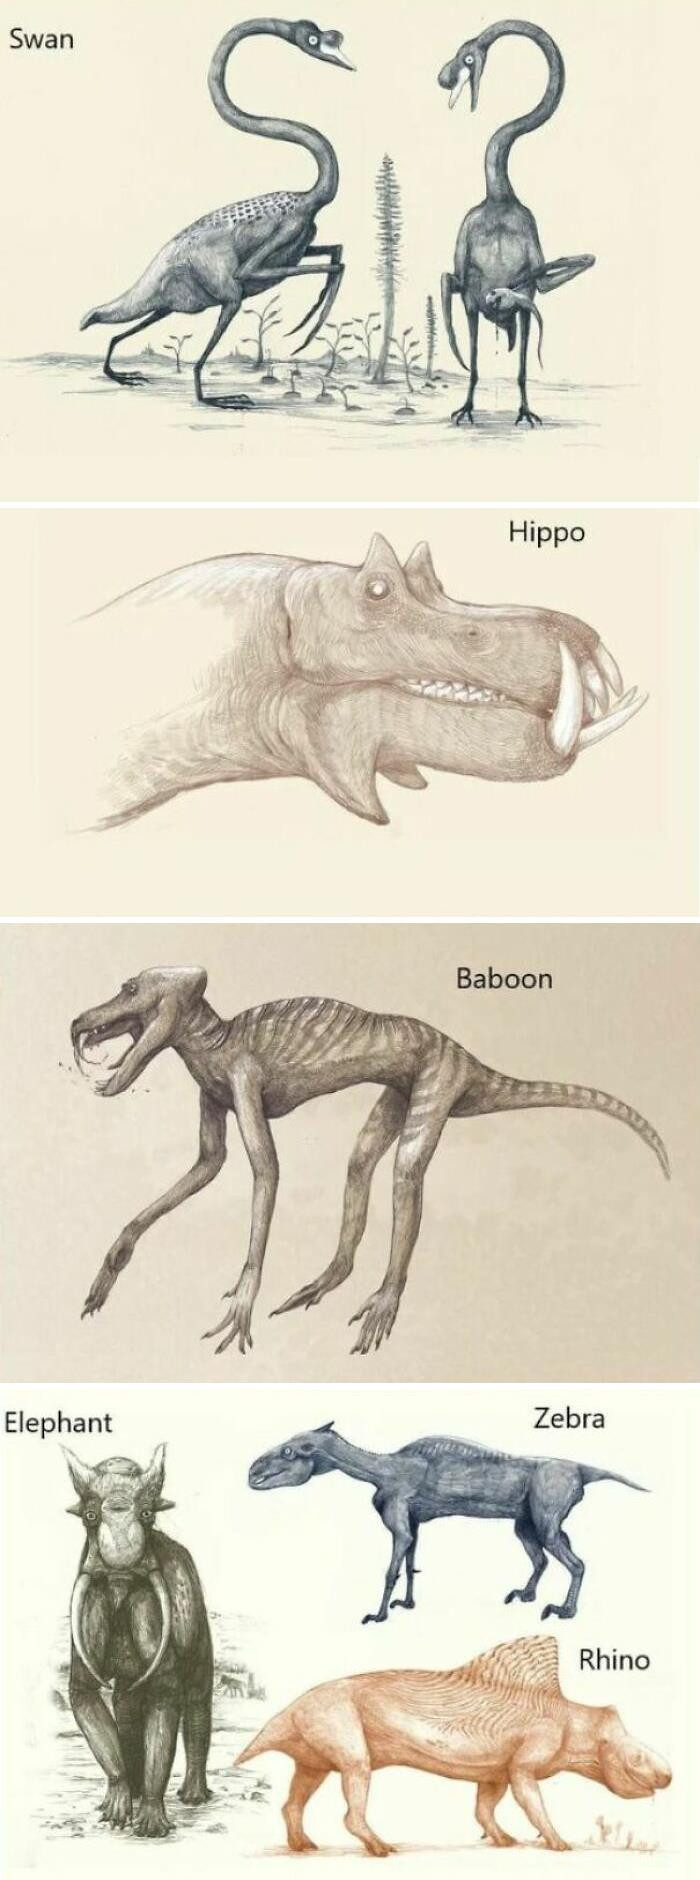 45. If We Drew Modern Animals The Way We Draw Dinosaurs, Based On Bones Alone